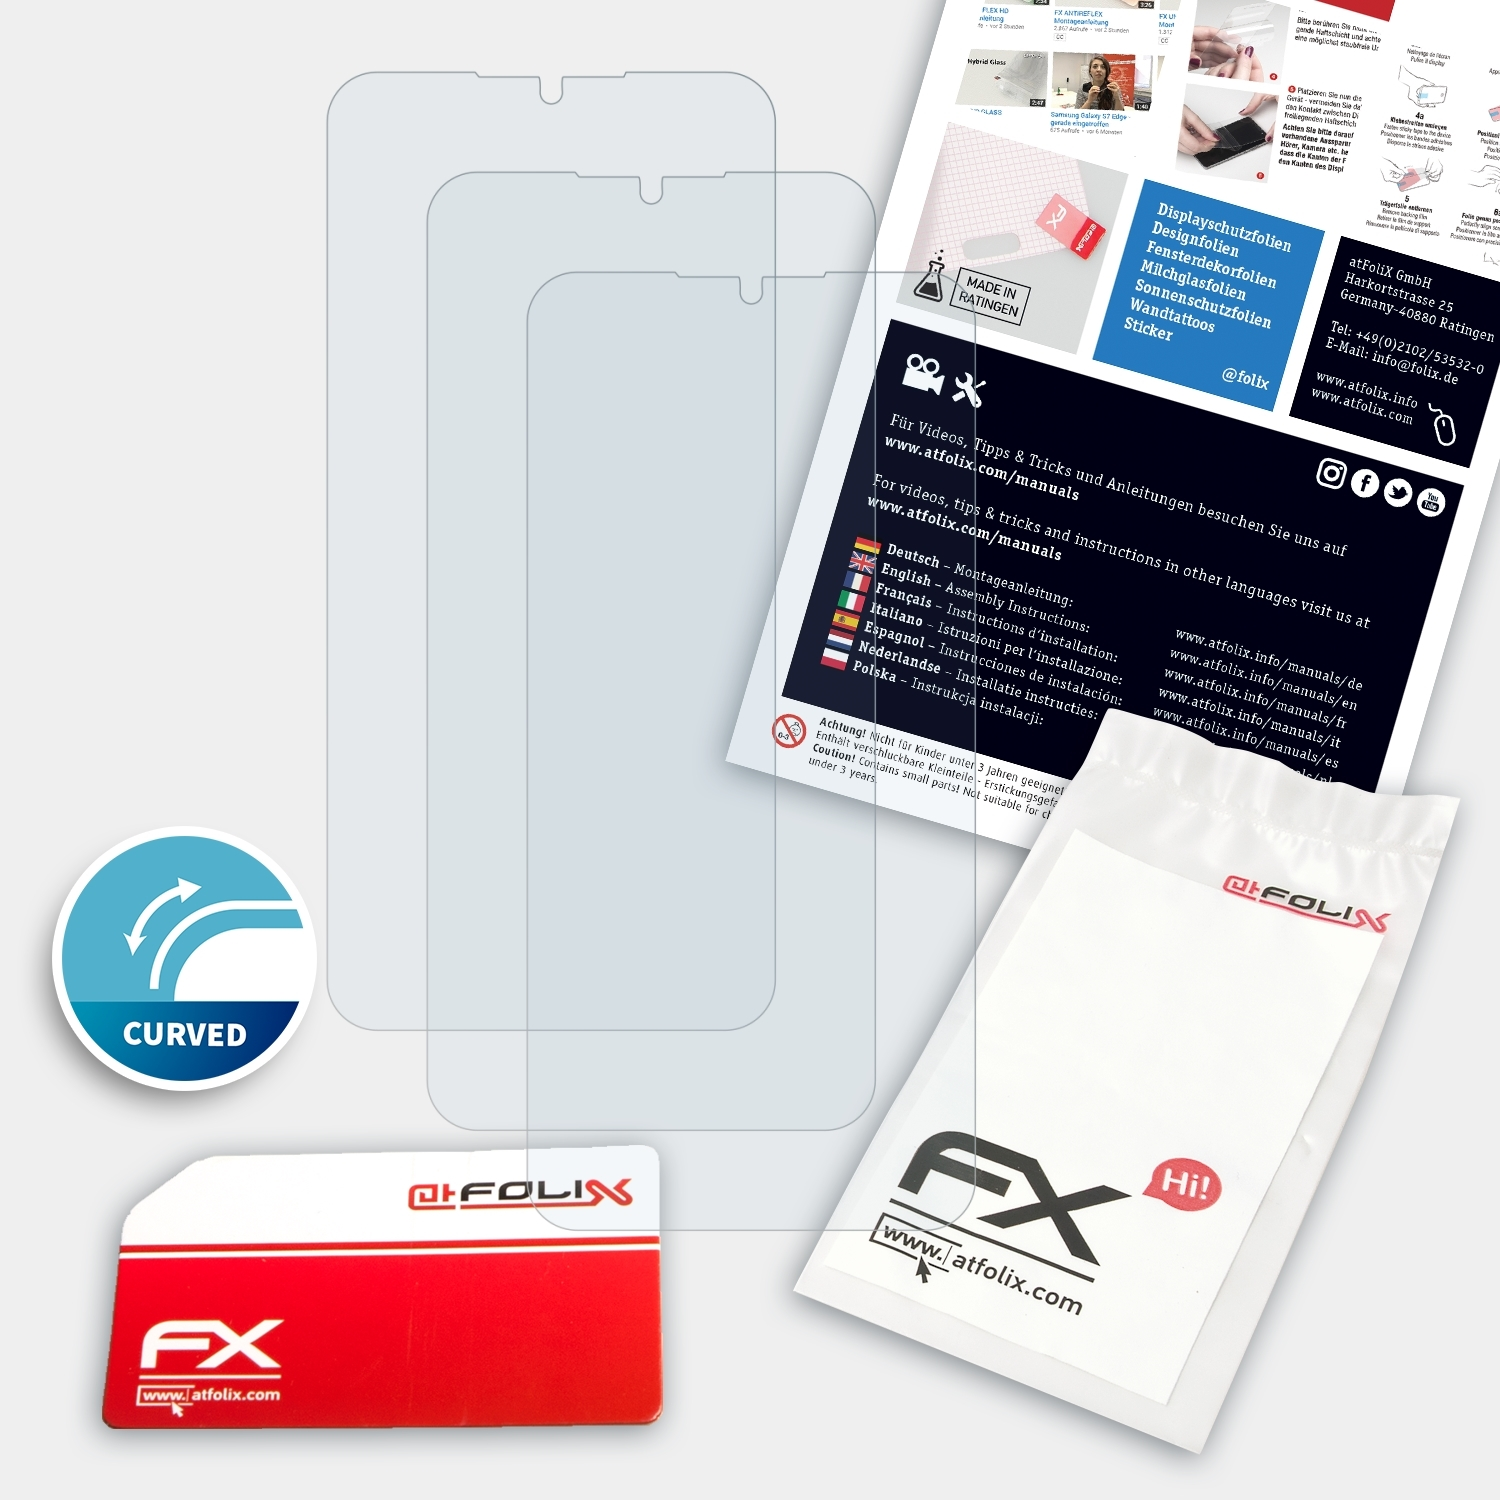 ATFOLIX 3x Displayschutz(für X23) Vivo FX-ActiFleX